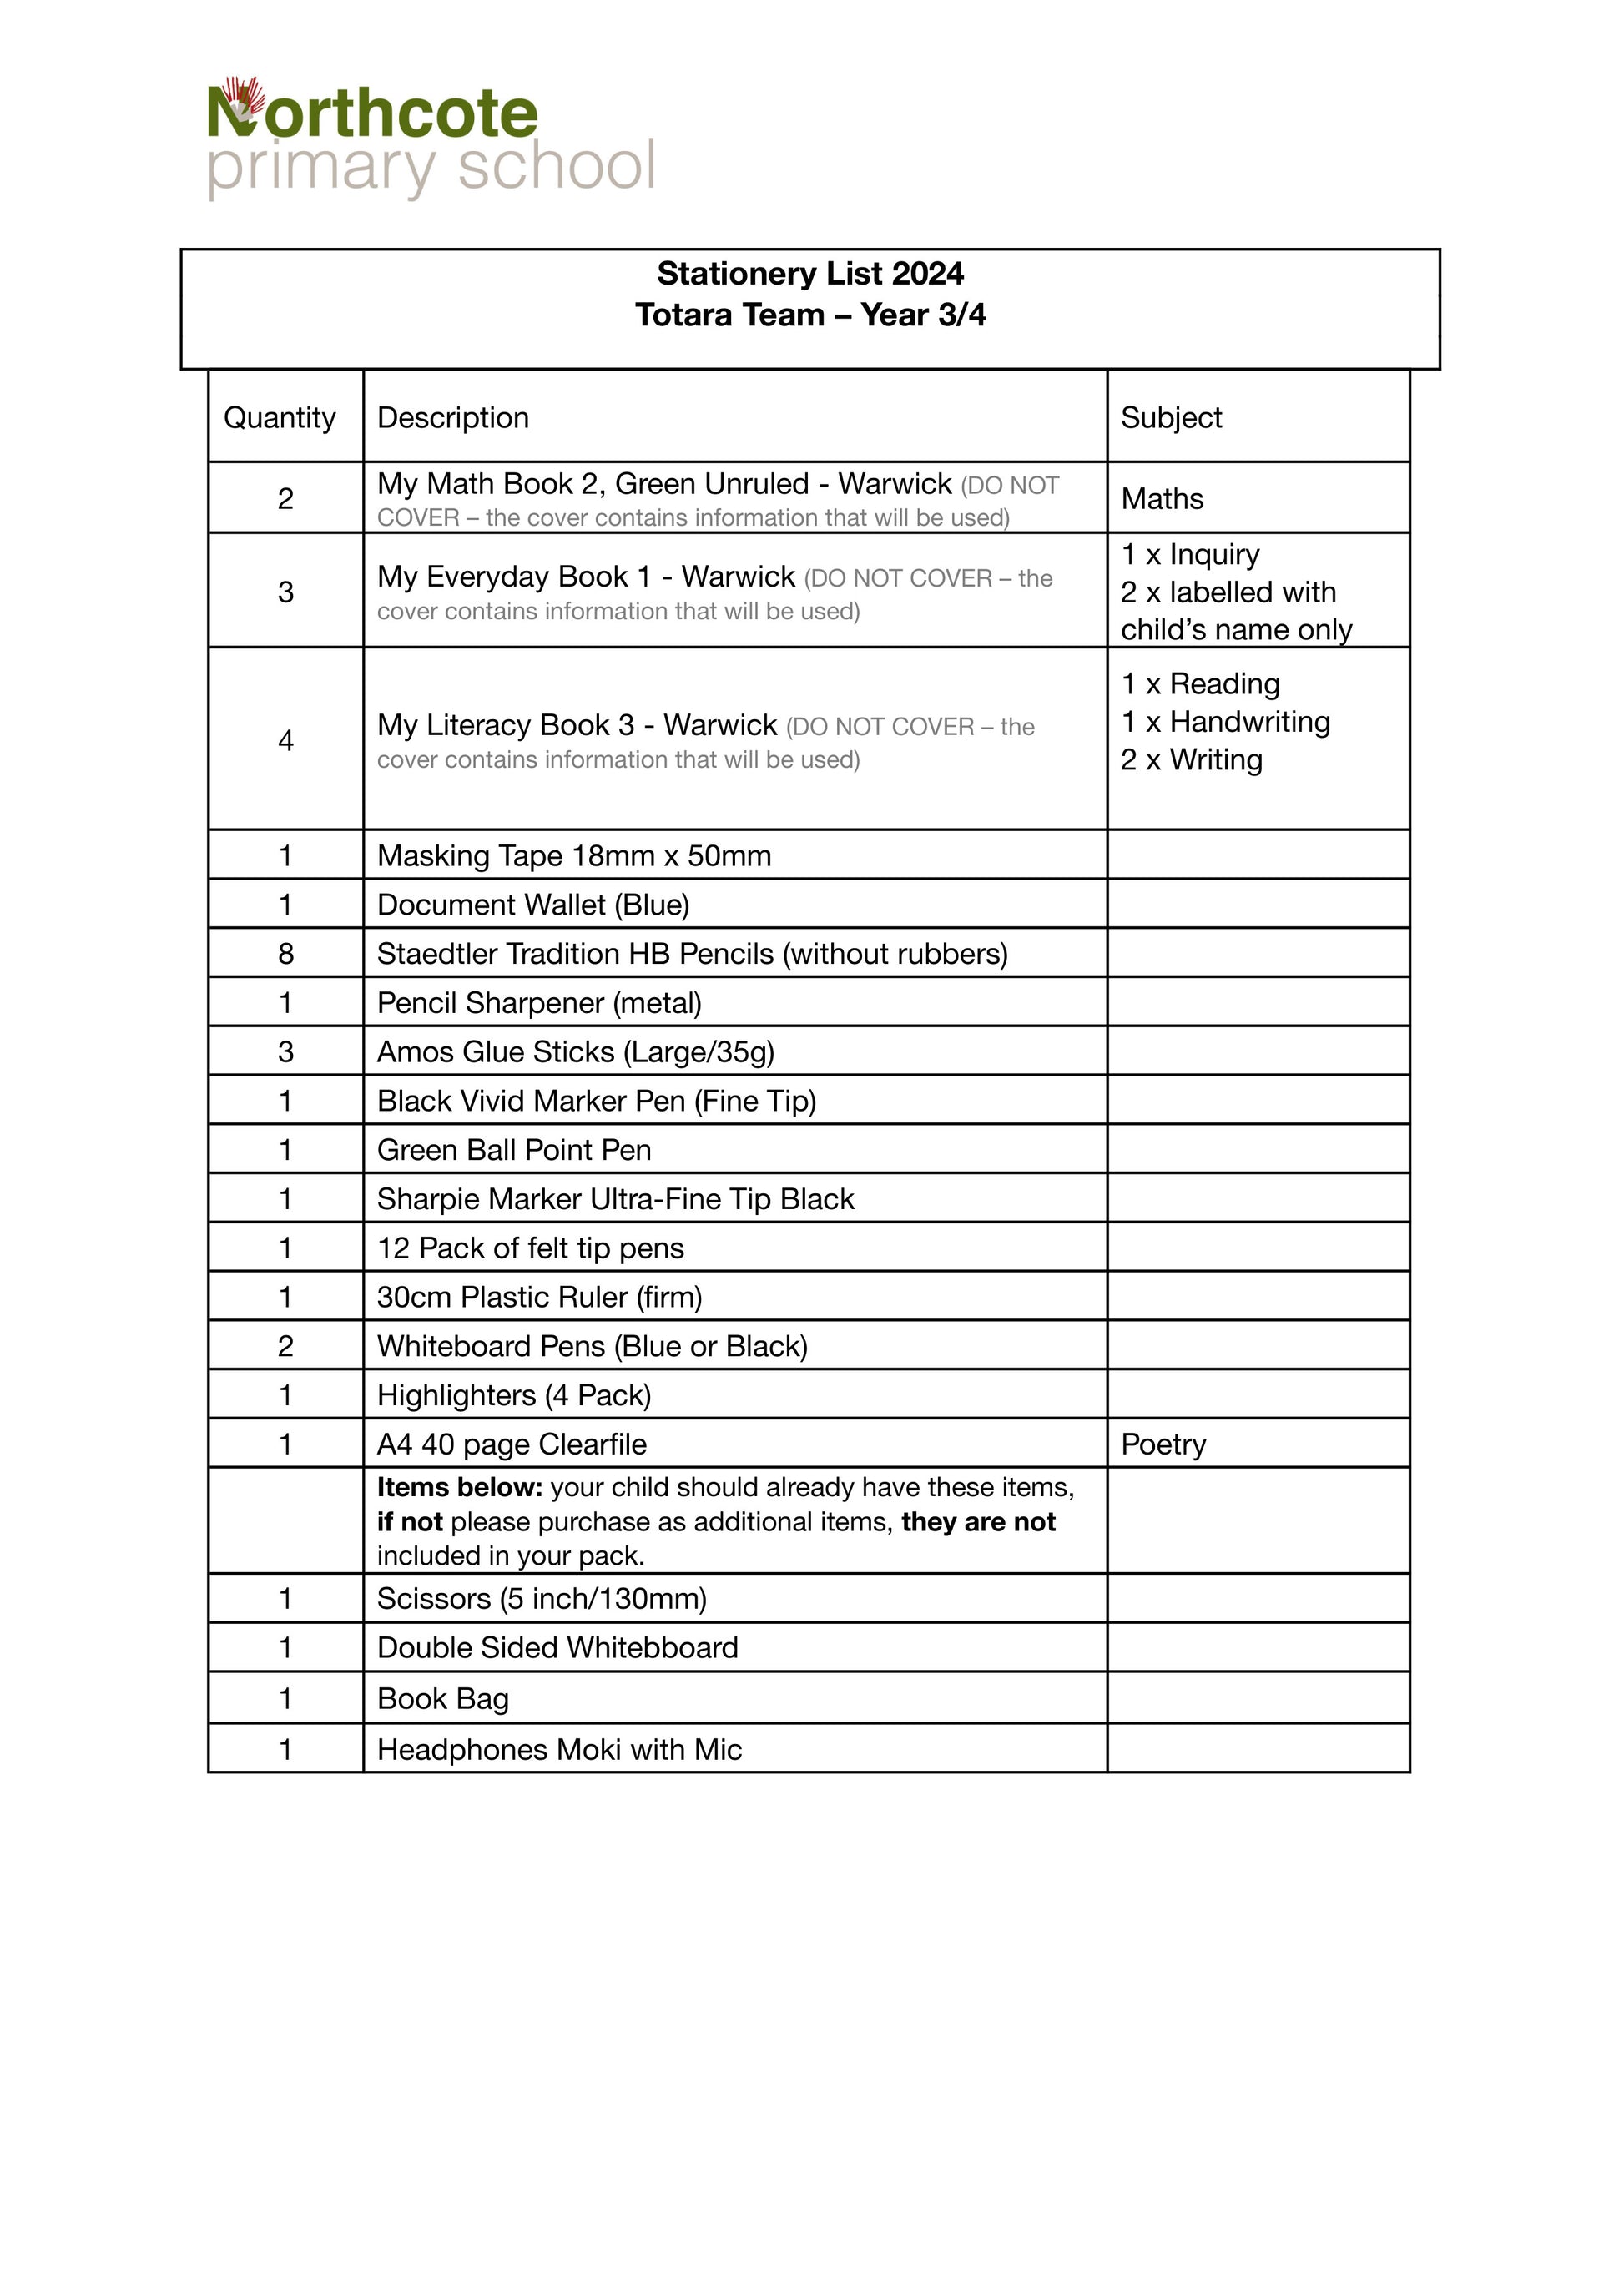 Northcote Primary School Stationery List 2024 Year 3 & 4